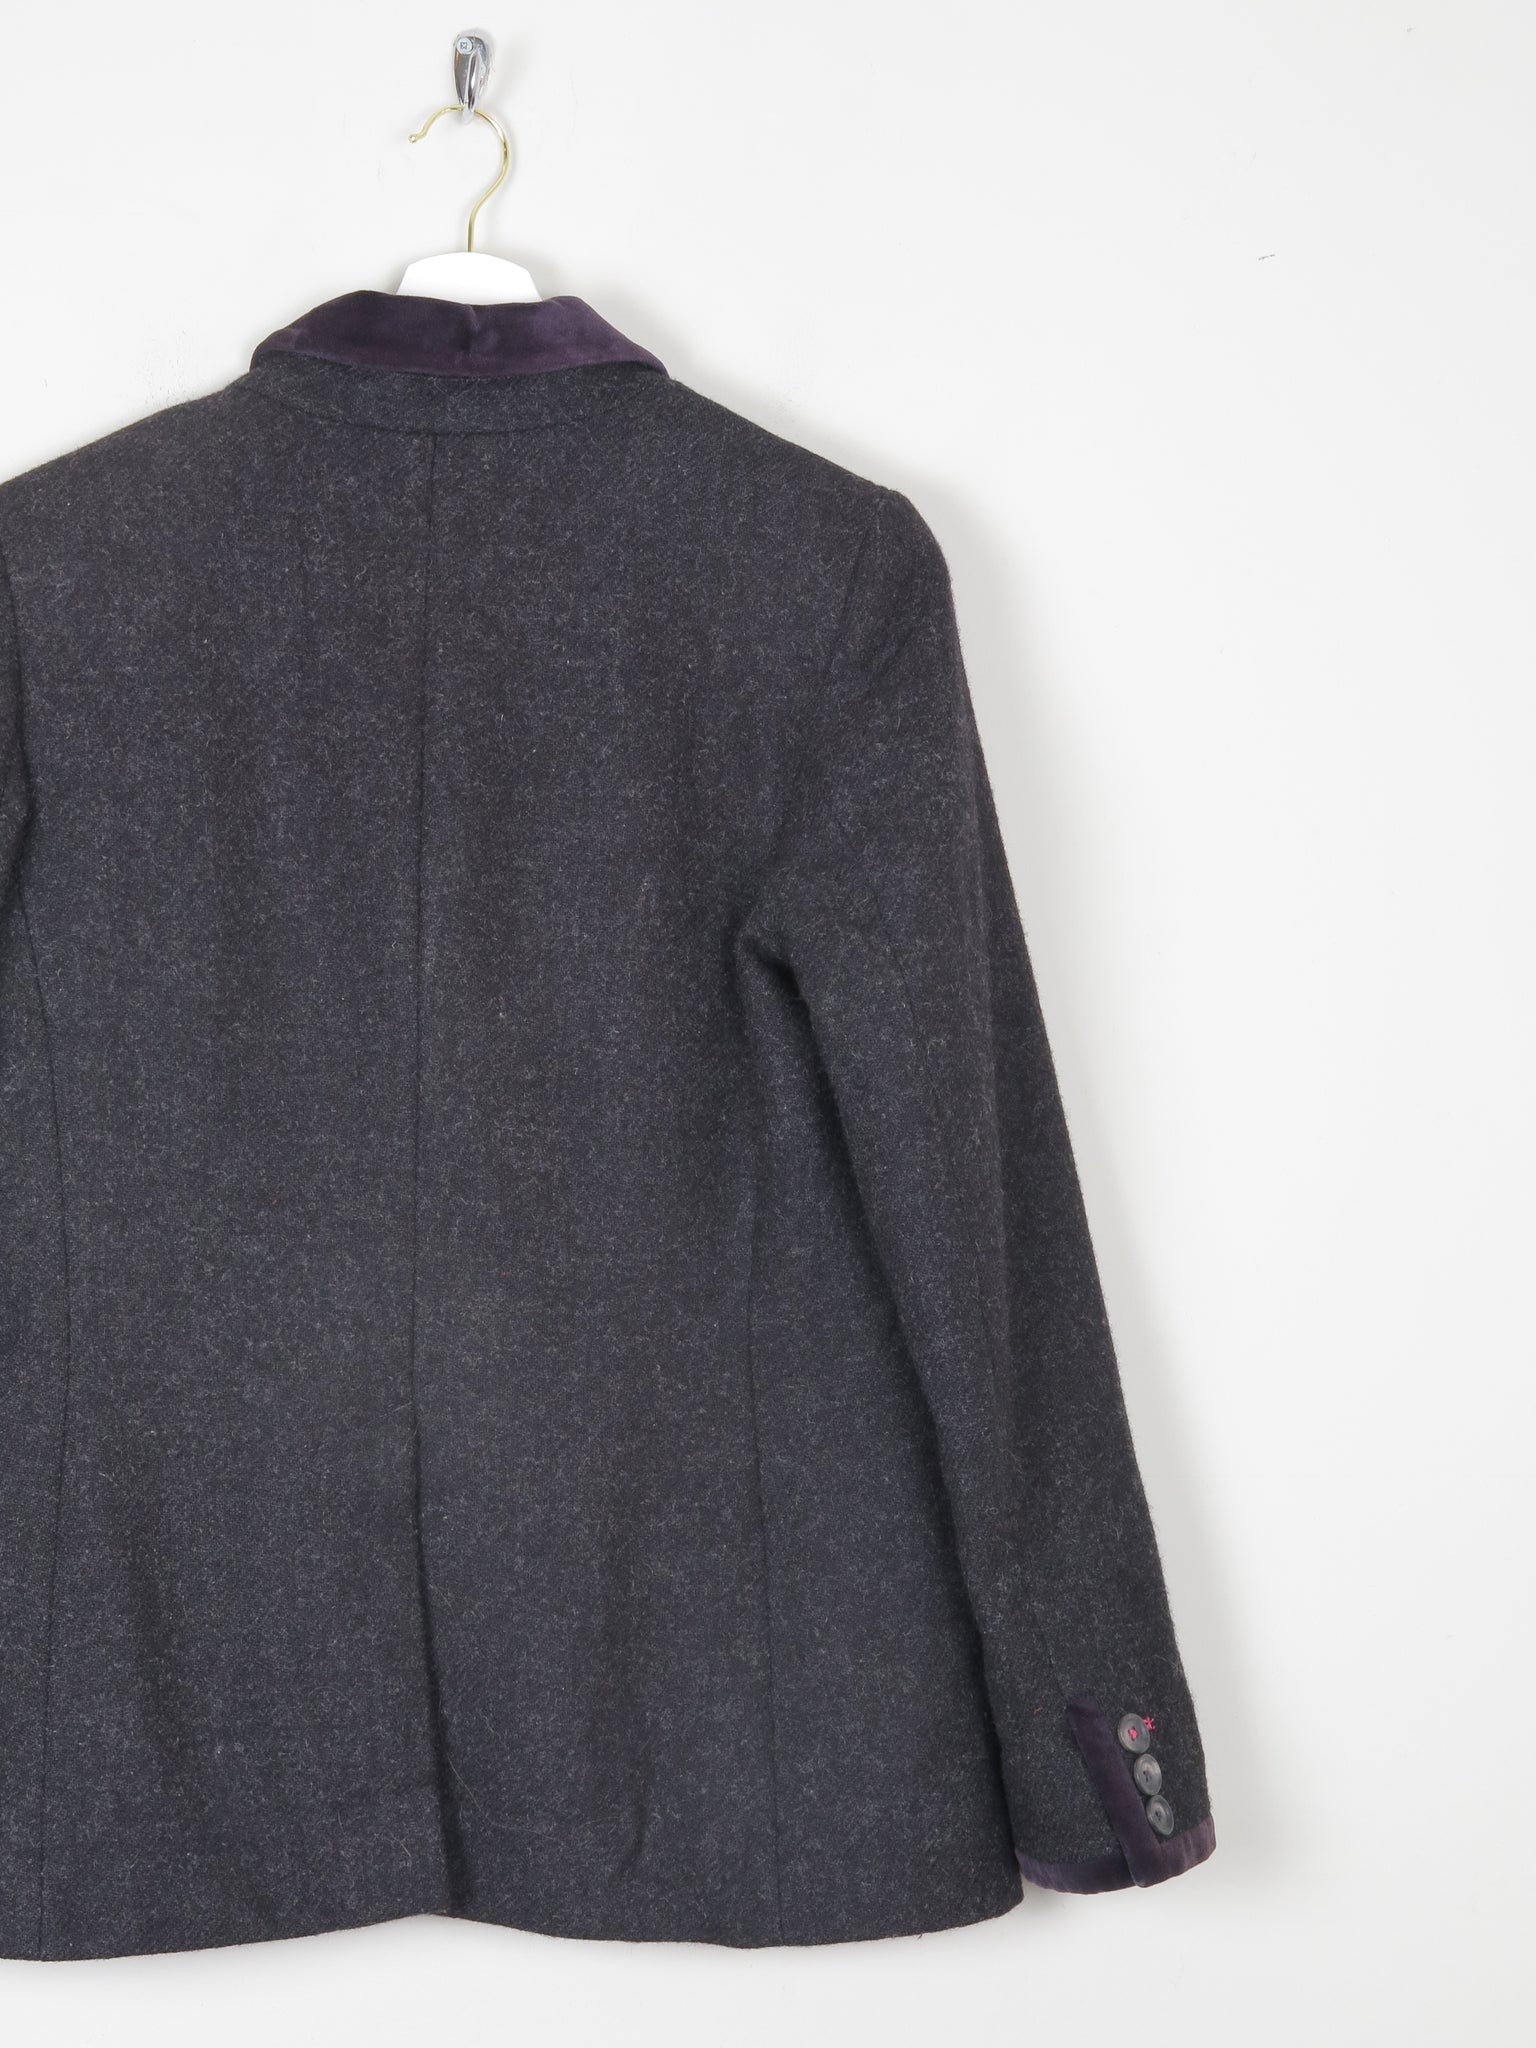 Women's Charcoal Tweed Boden Tailored Jacket 10/12